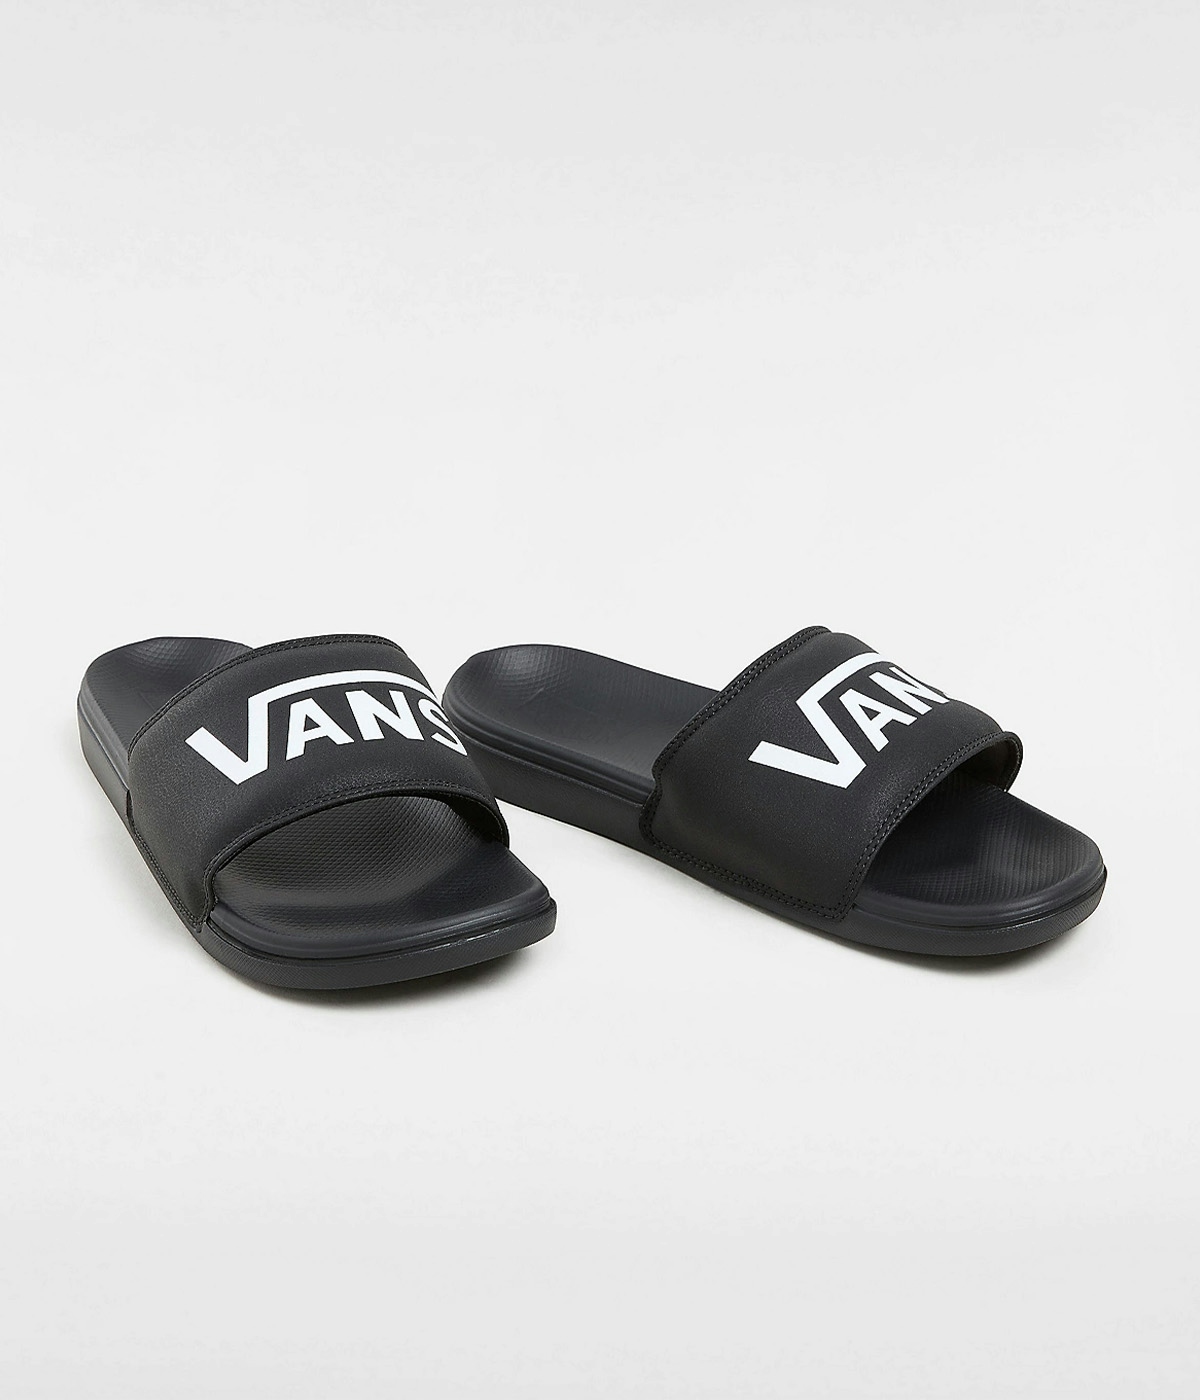 Vans Slippers La Costa Slide-On Black